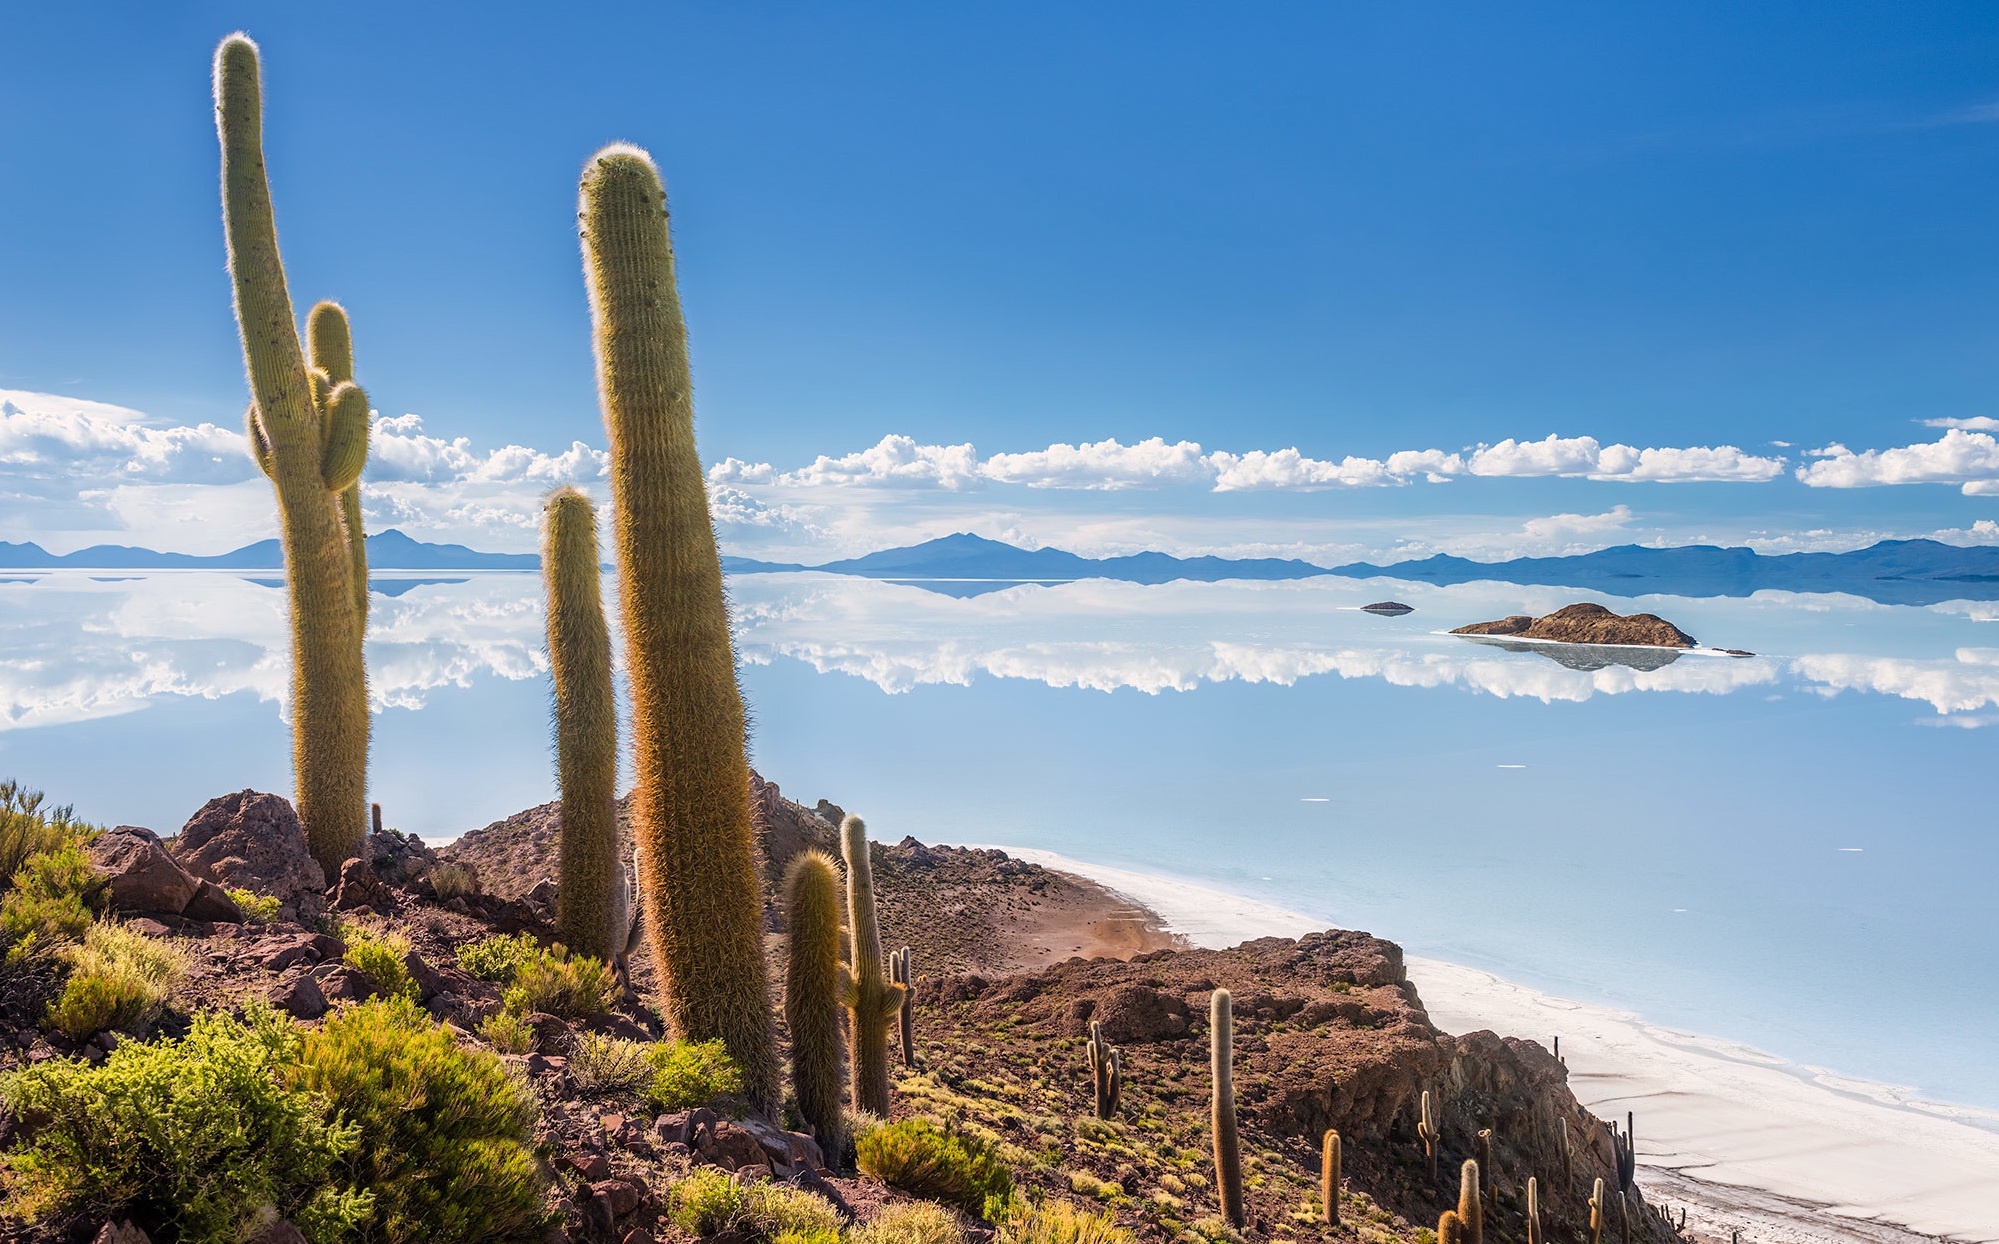 Descarga gratuita de fondo de pantalla para móvil de Cactus, Cielo, Mar, Costa, Nube, Bolivia, Tierra/naturaleza.